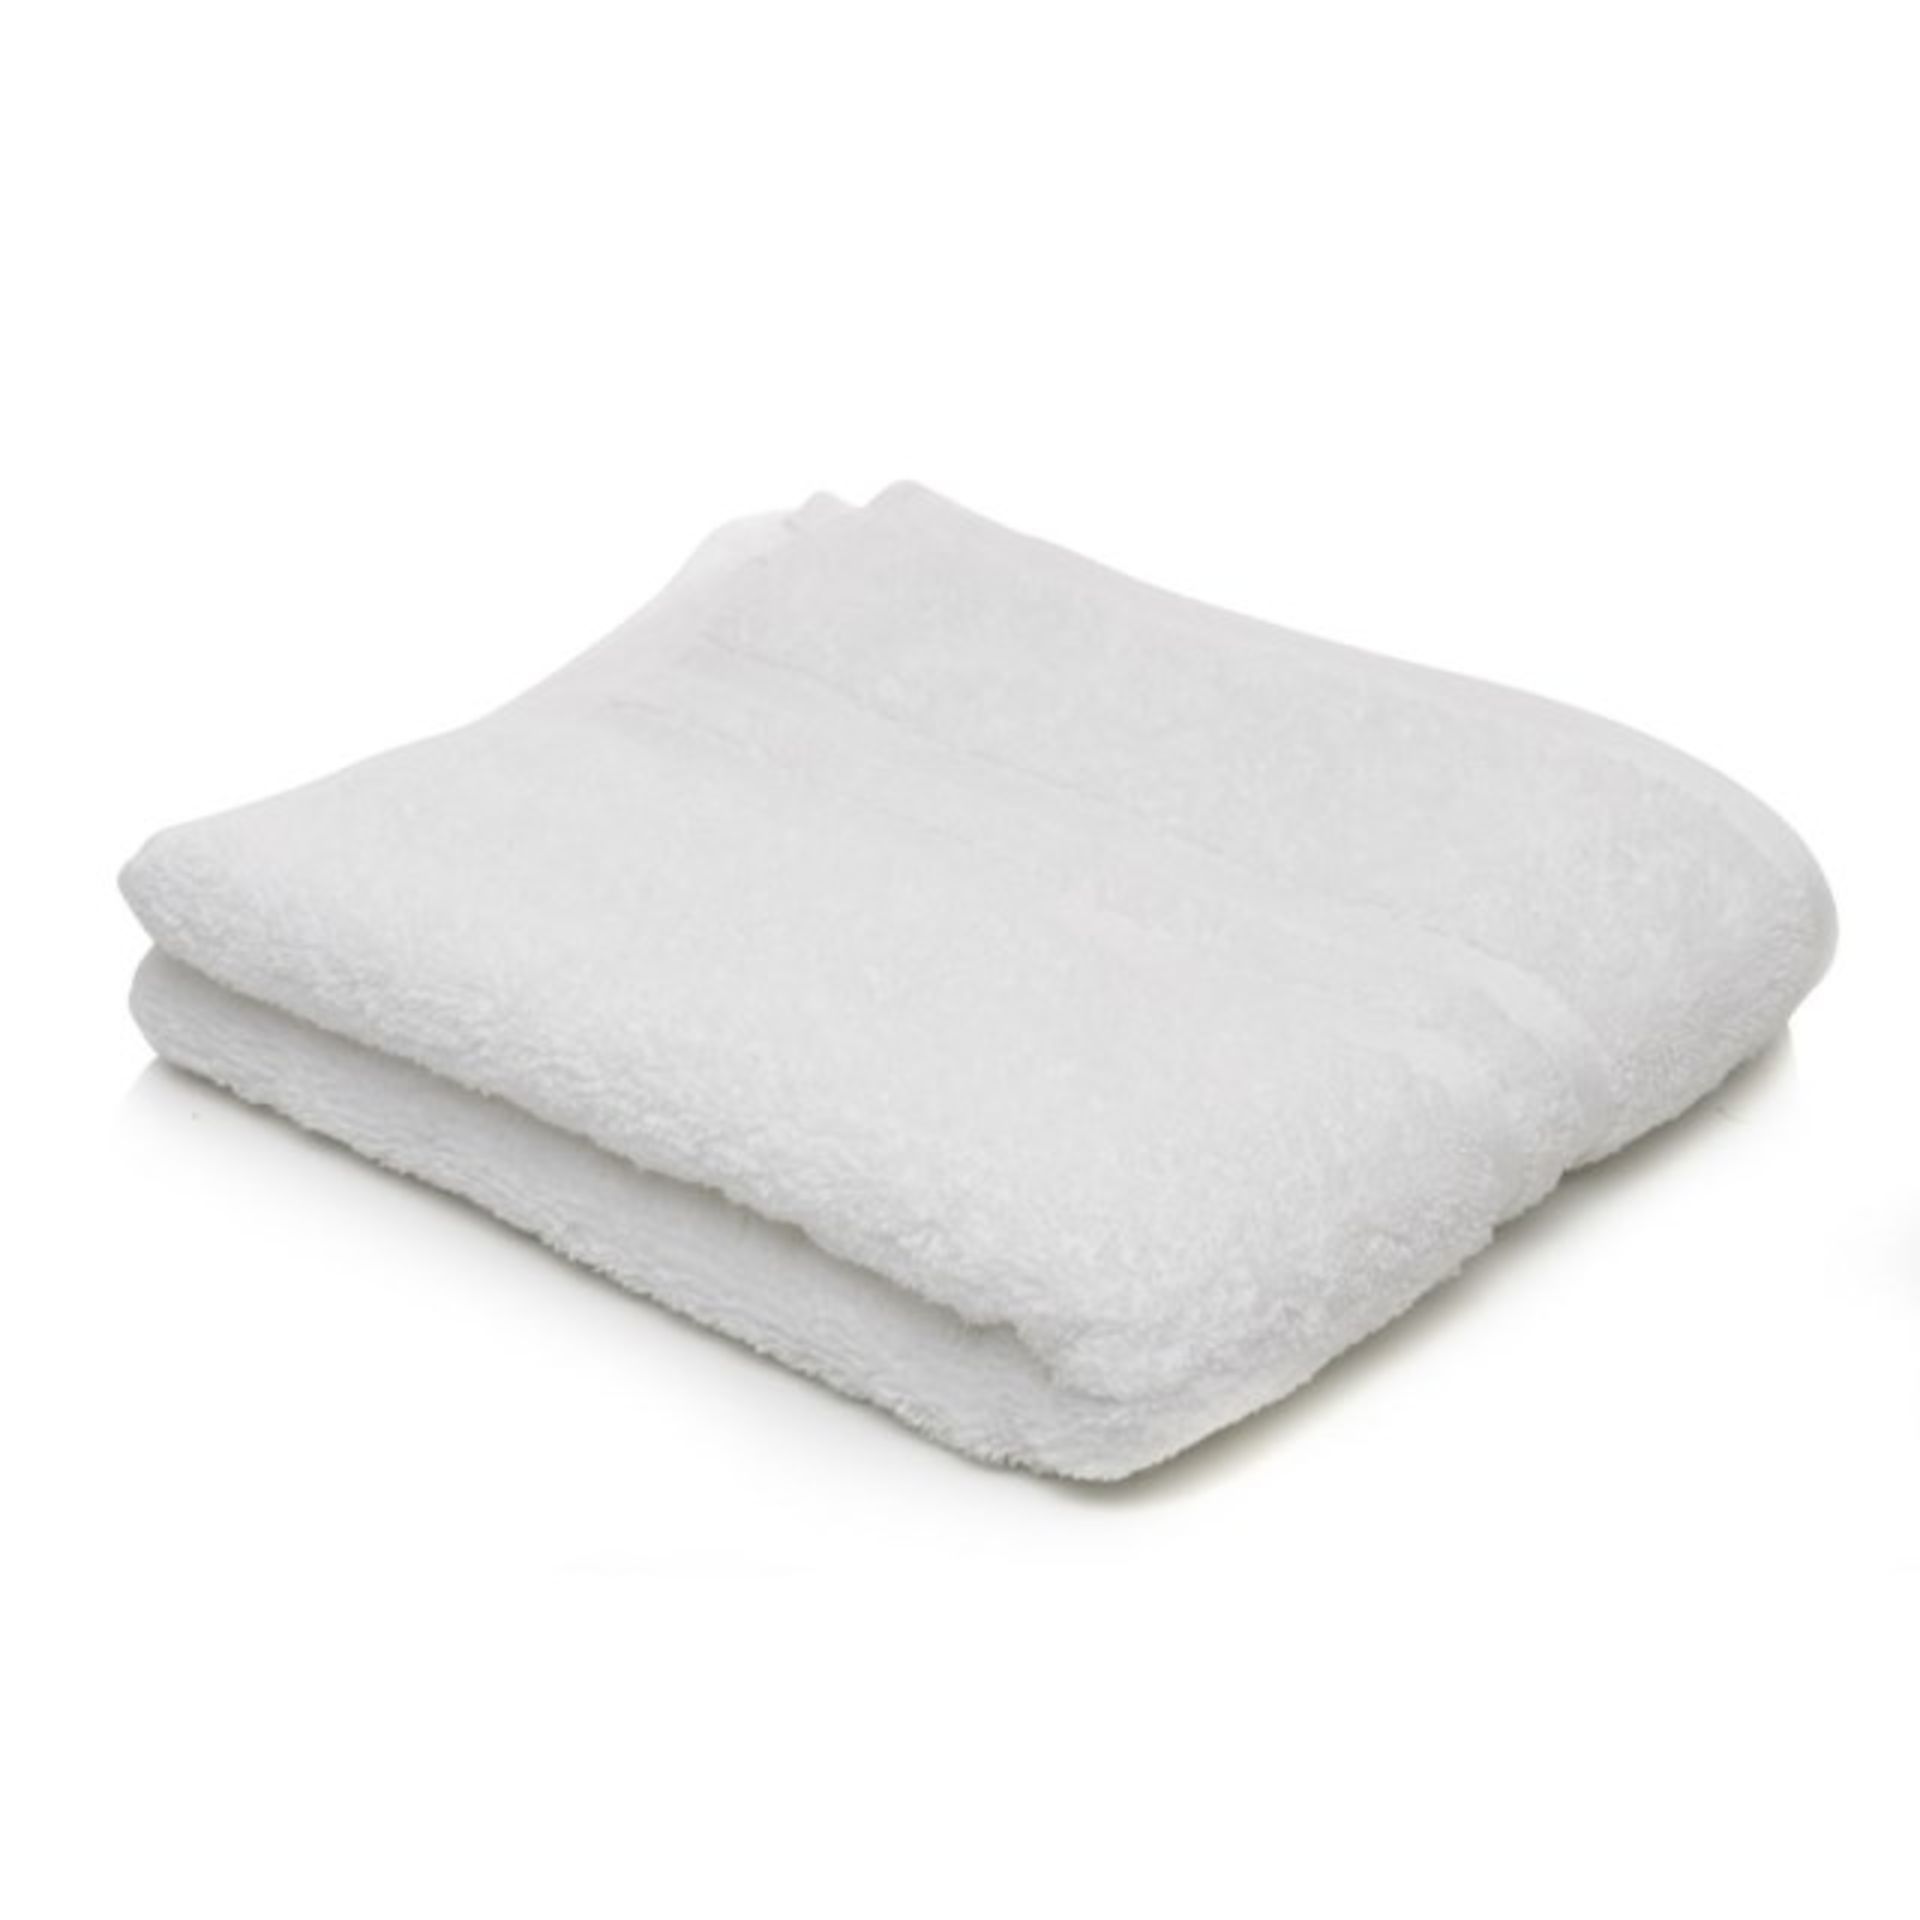 V *TRADE QTY* Brand New Hotel Quality Bath Towel 100% Cotton 70cm x 135cm X 3 YOUR BID PRICE TO BE